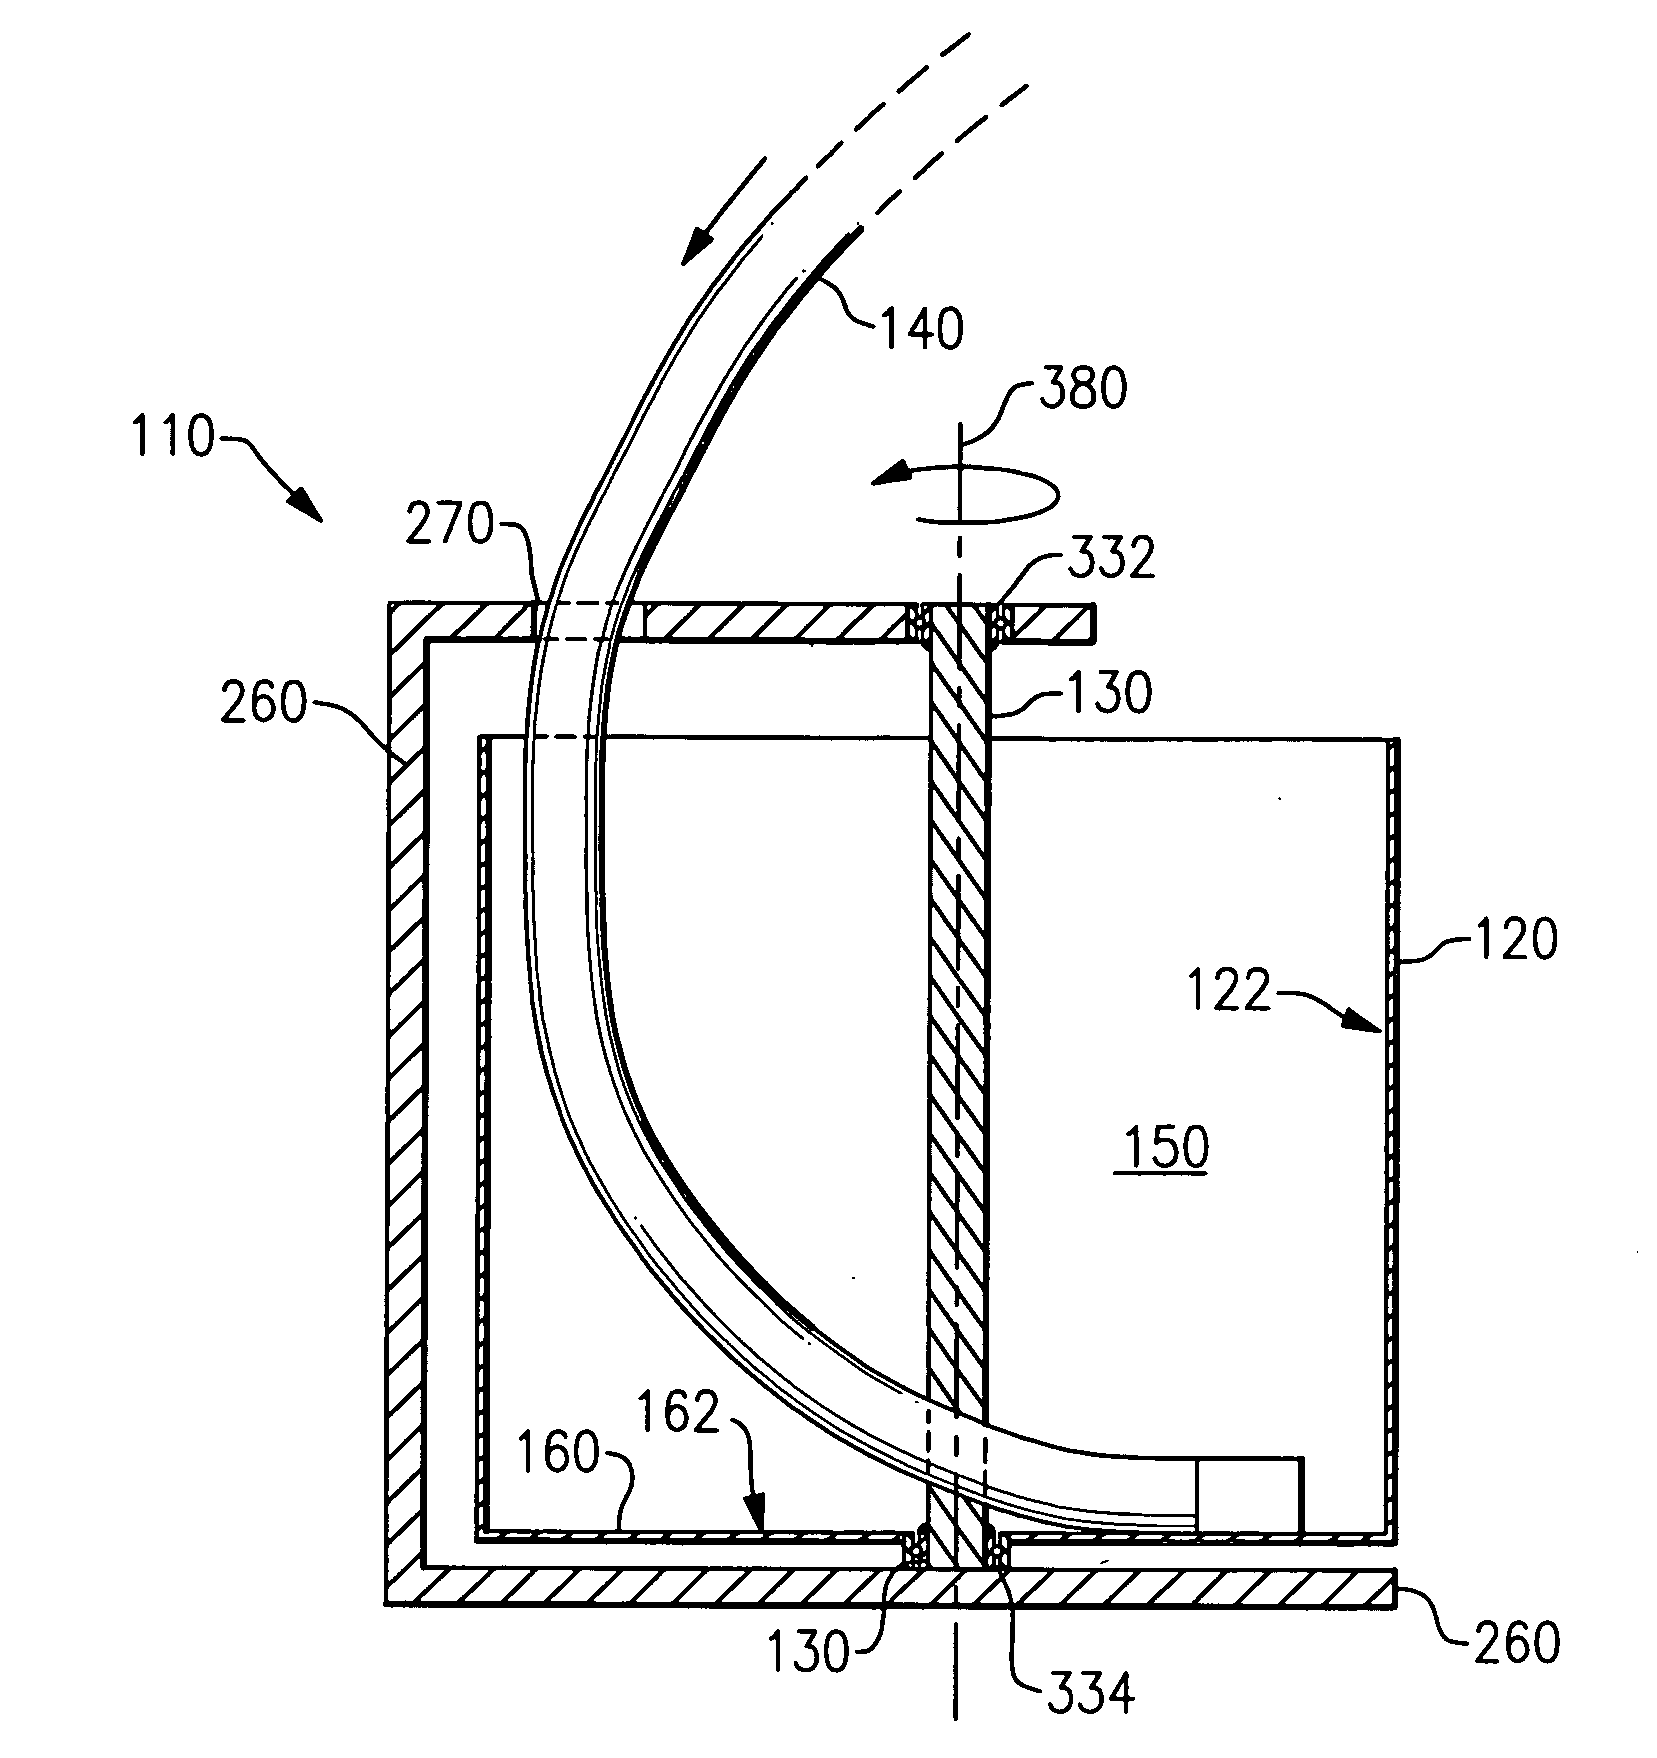 Insertion tube storage carousel